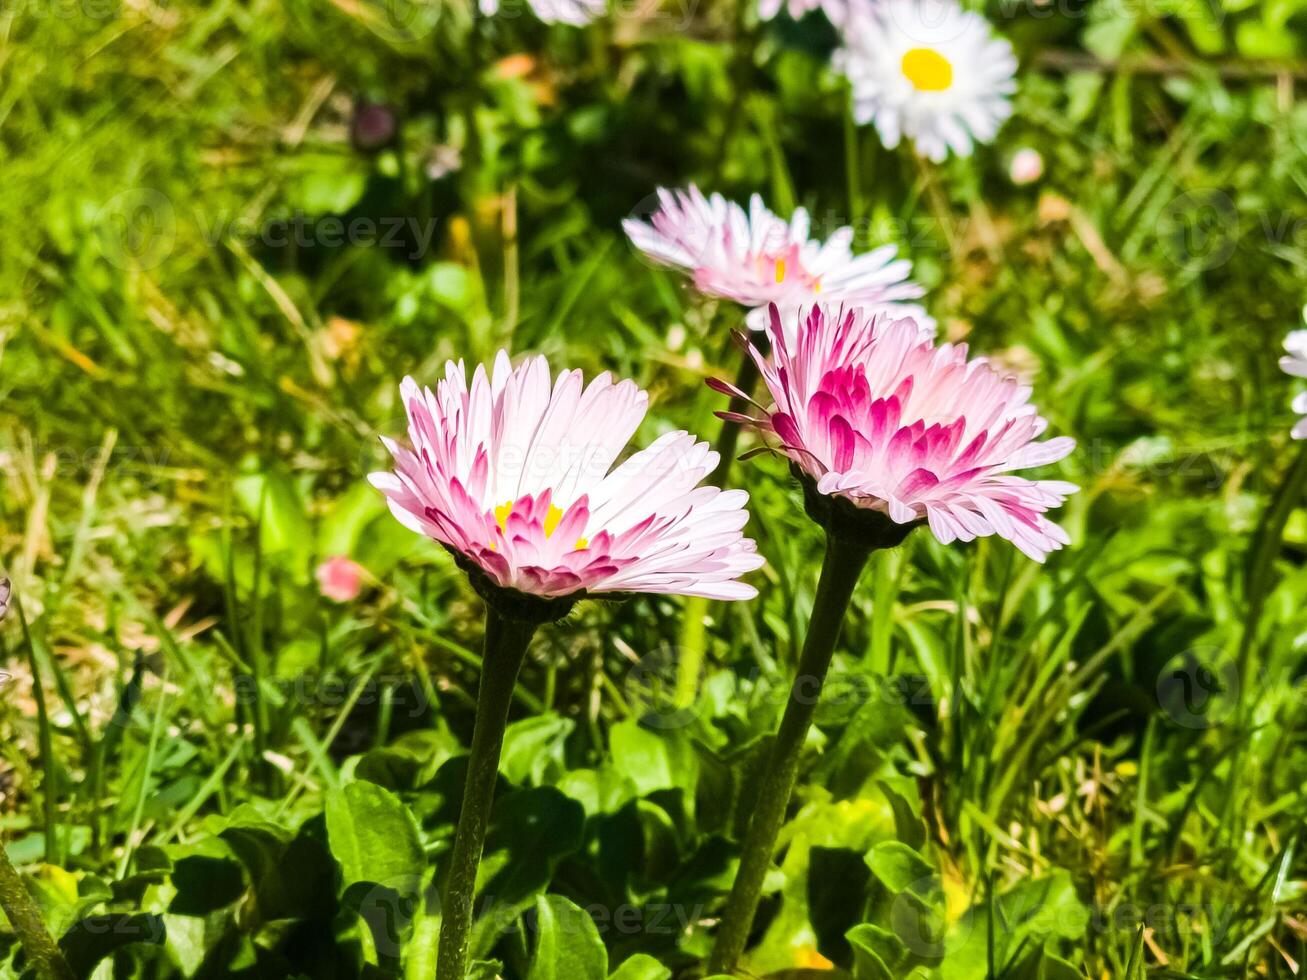 delicado branco e Rosa margaridas ou Bellis perennis flores em verde grama. gramado margarida floresce dentro Primavera foto